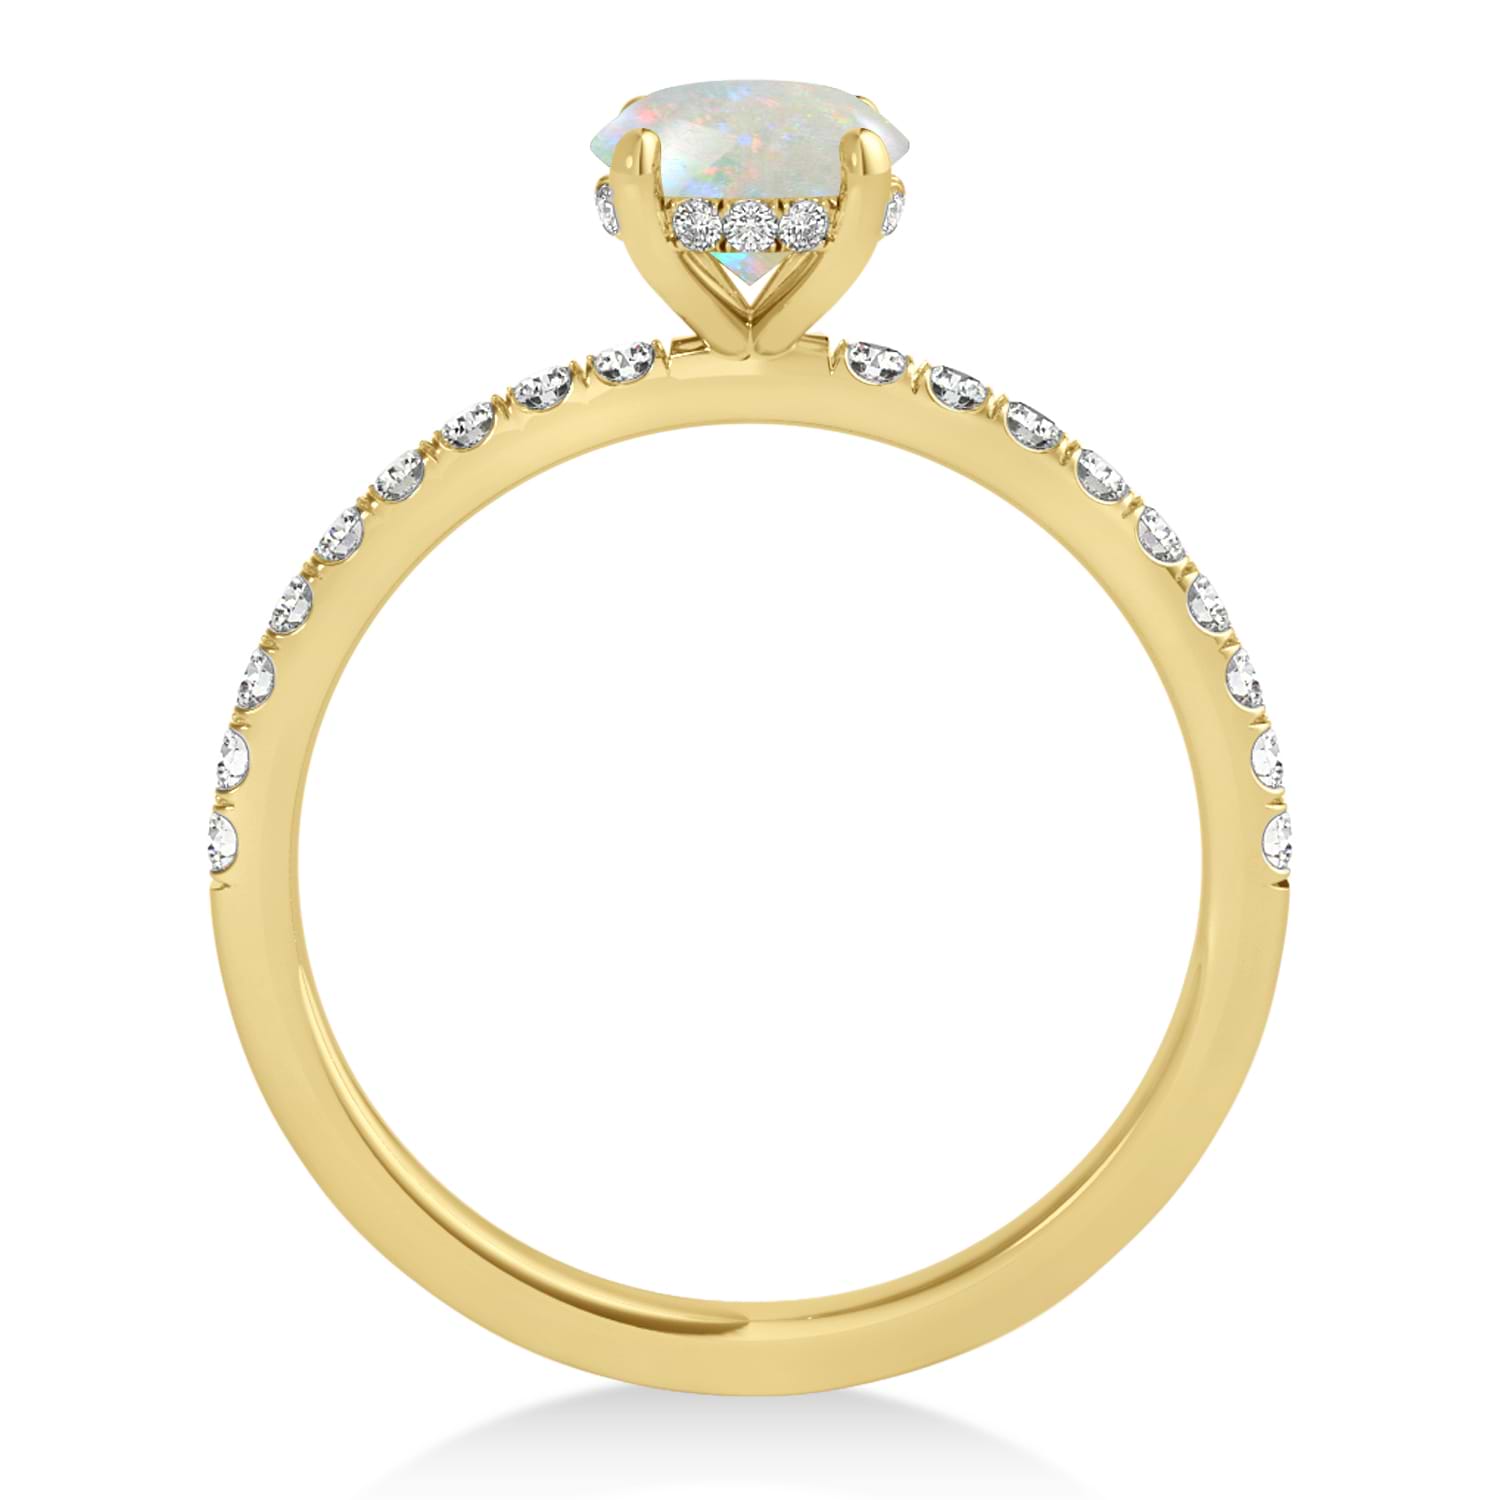 Oval Opal & Diamond Single Row Hidden Halo Engagement Ring 14k Yellow Gold (0.68ct)